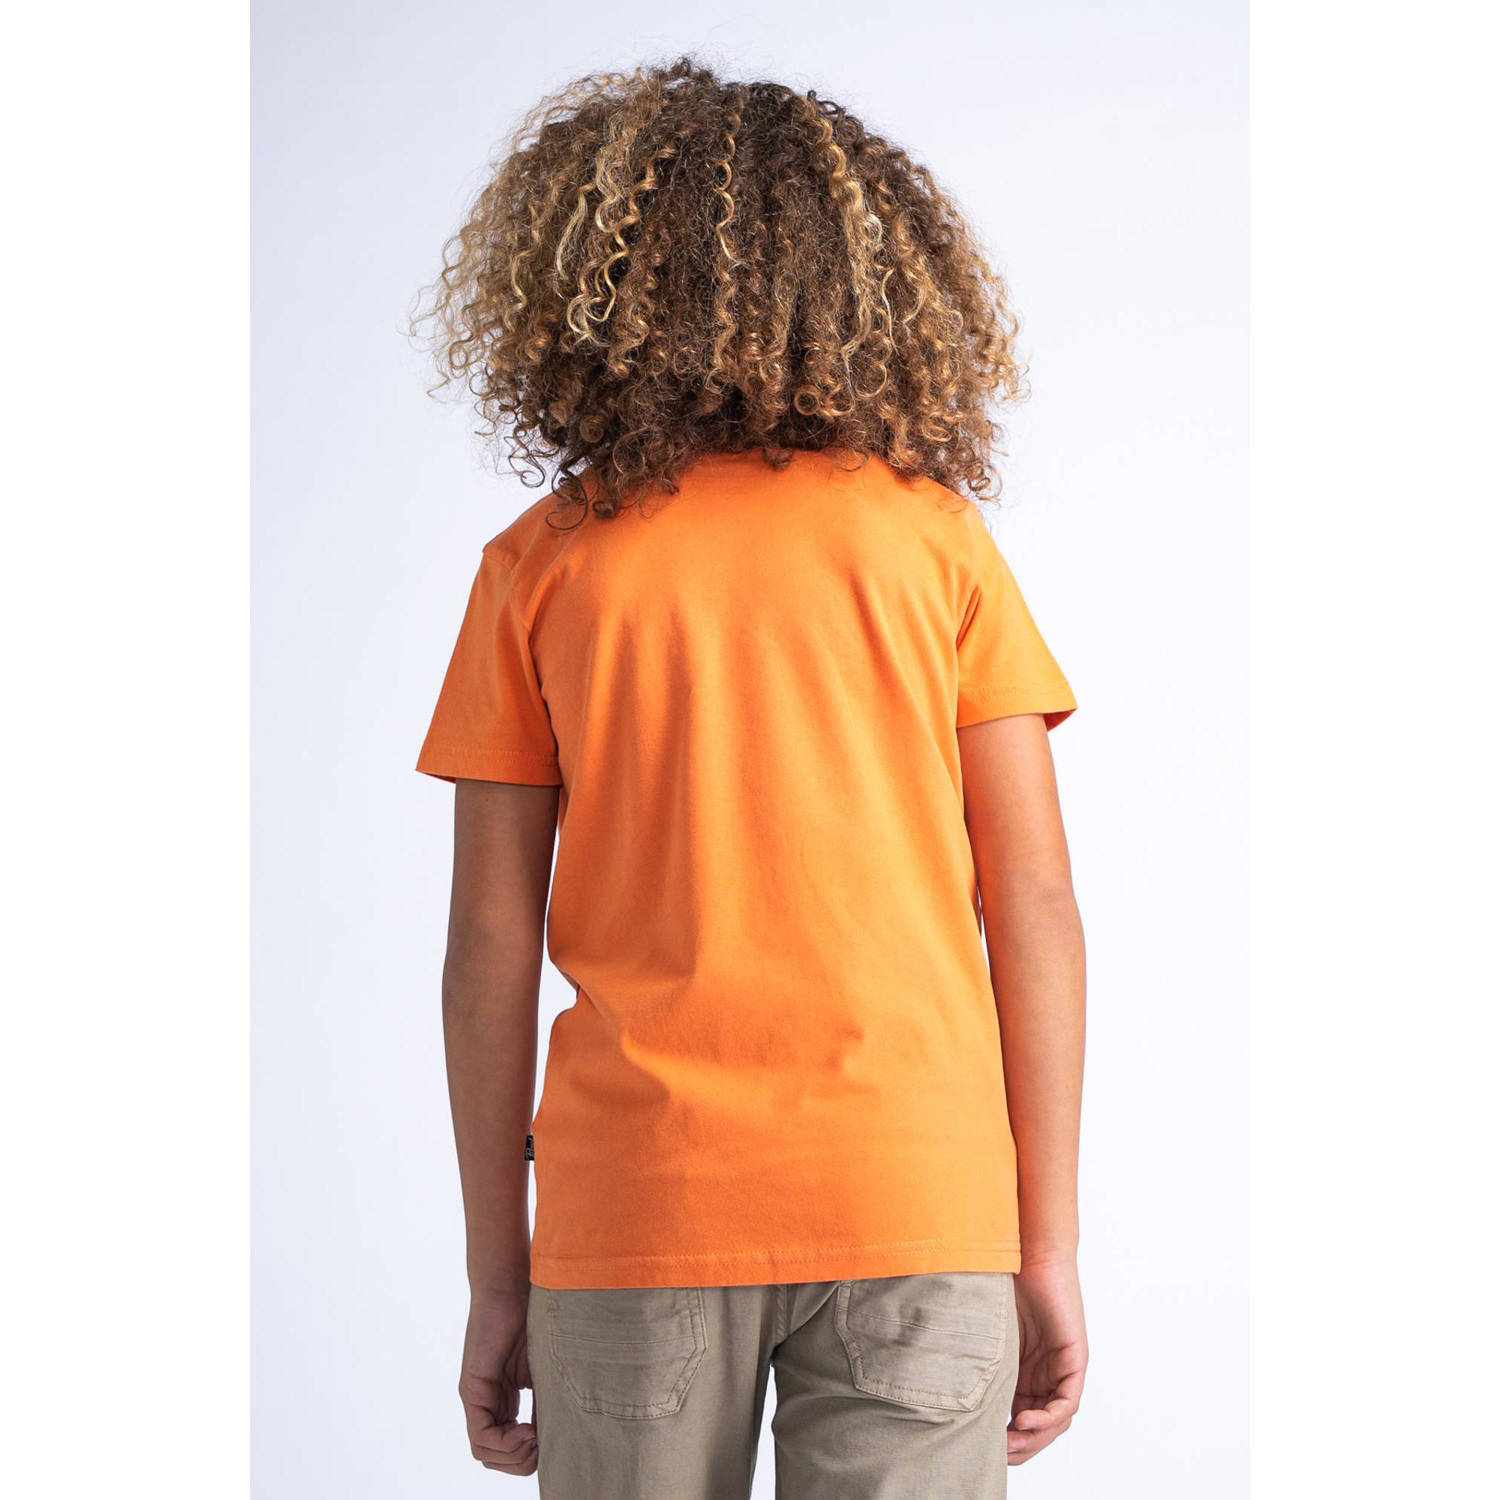 Petrol Industries T-shirt met logo oranje